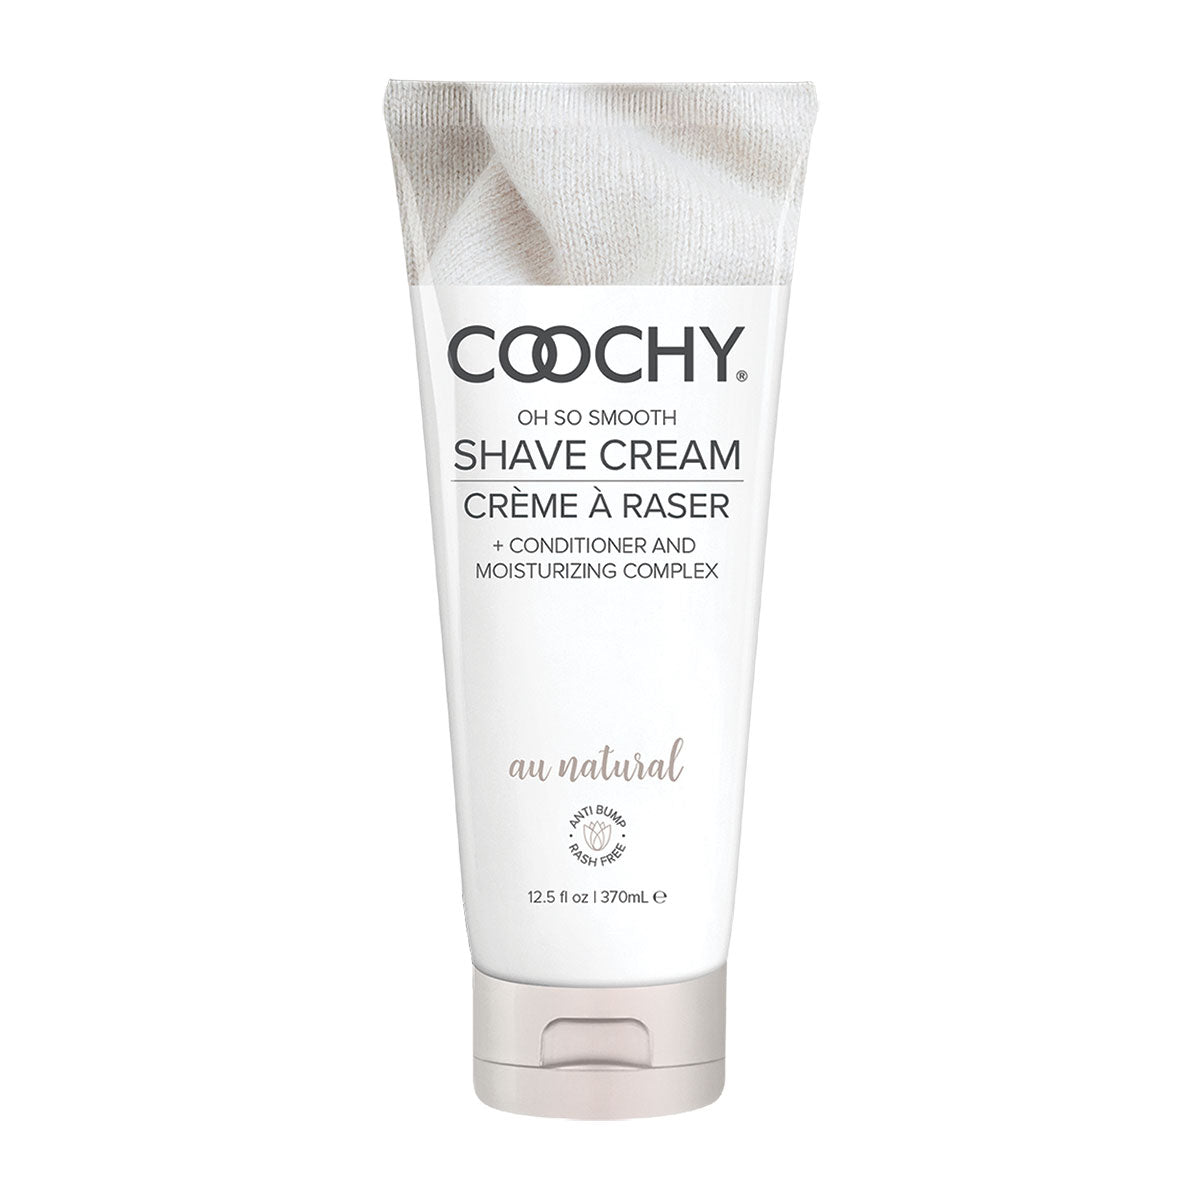 Coochy Shave Cream 12.5oz - Au Natural